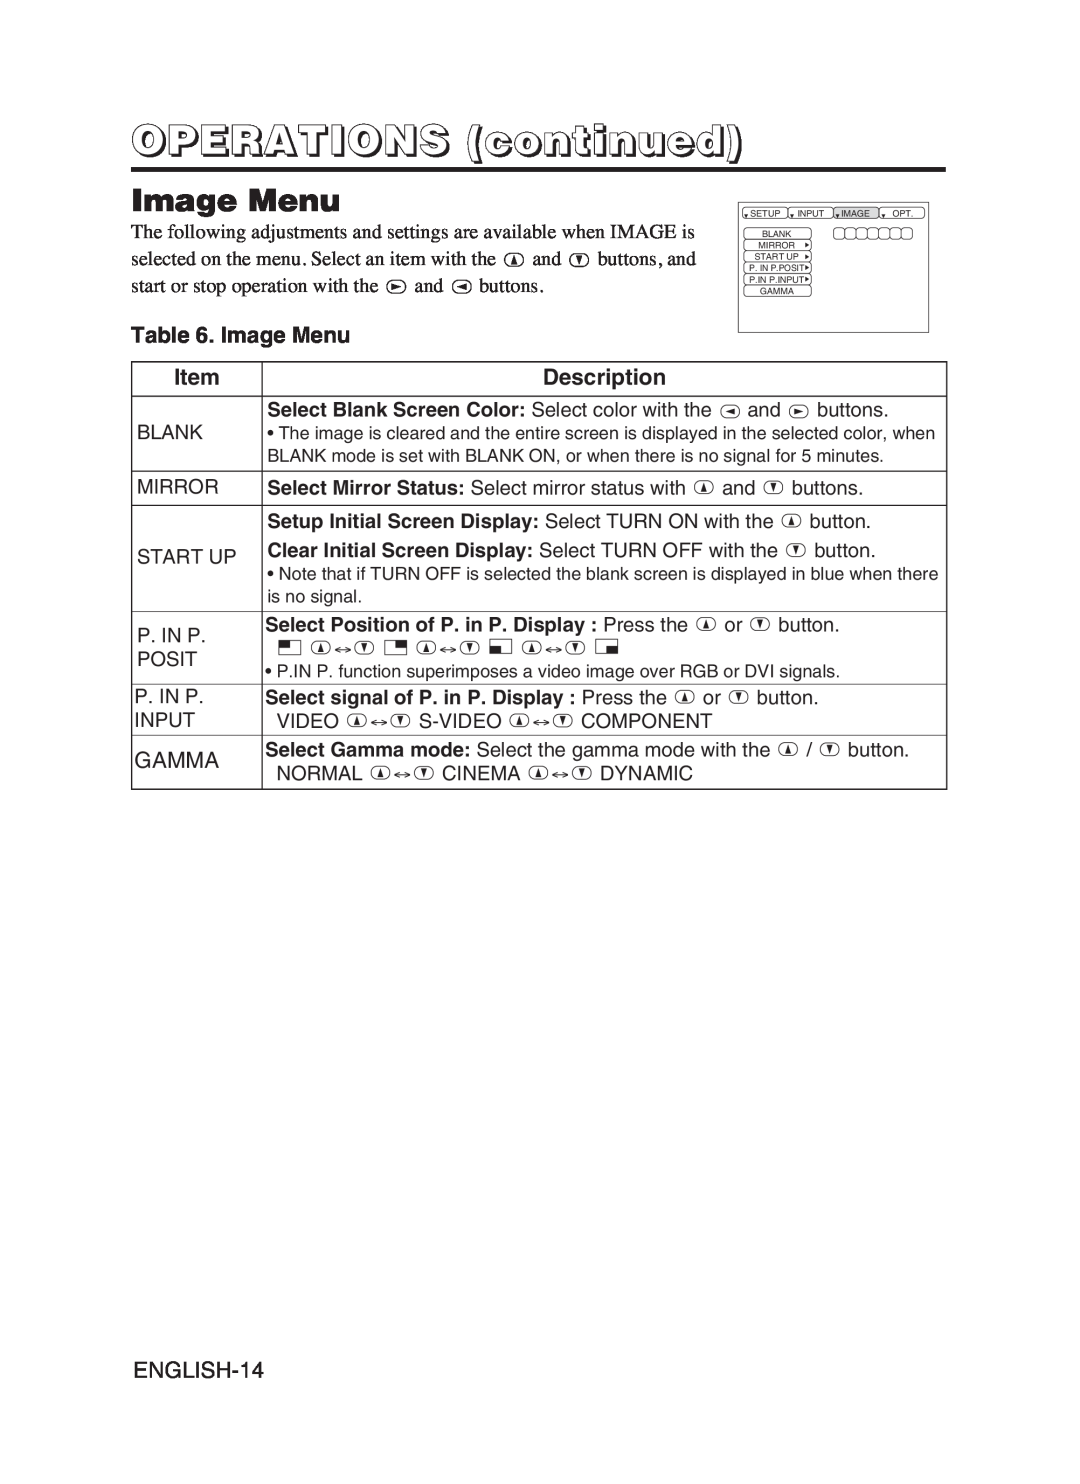 Hitachi CP-SX5600W user manual Image Menu, OPERATIONS continued, Description, Gamma, ENGLISH-14 